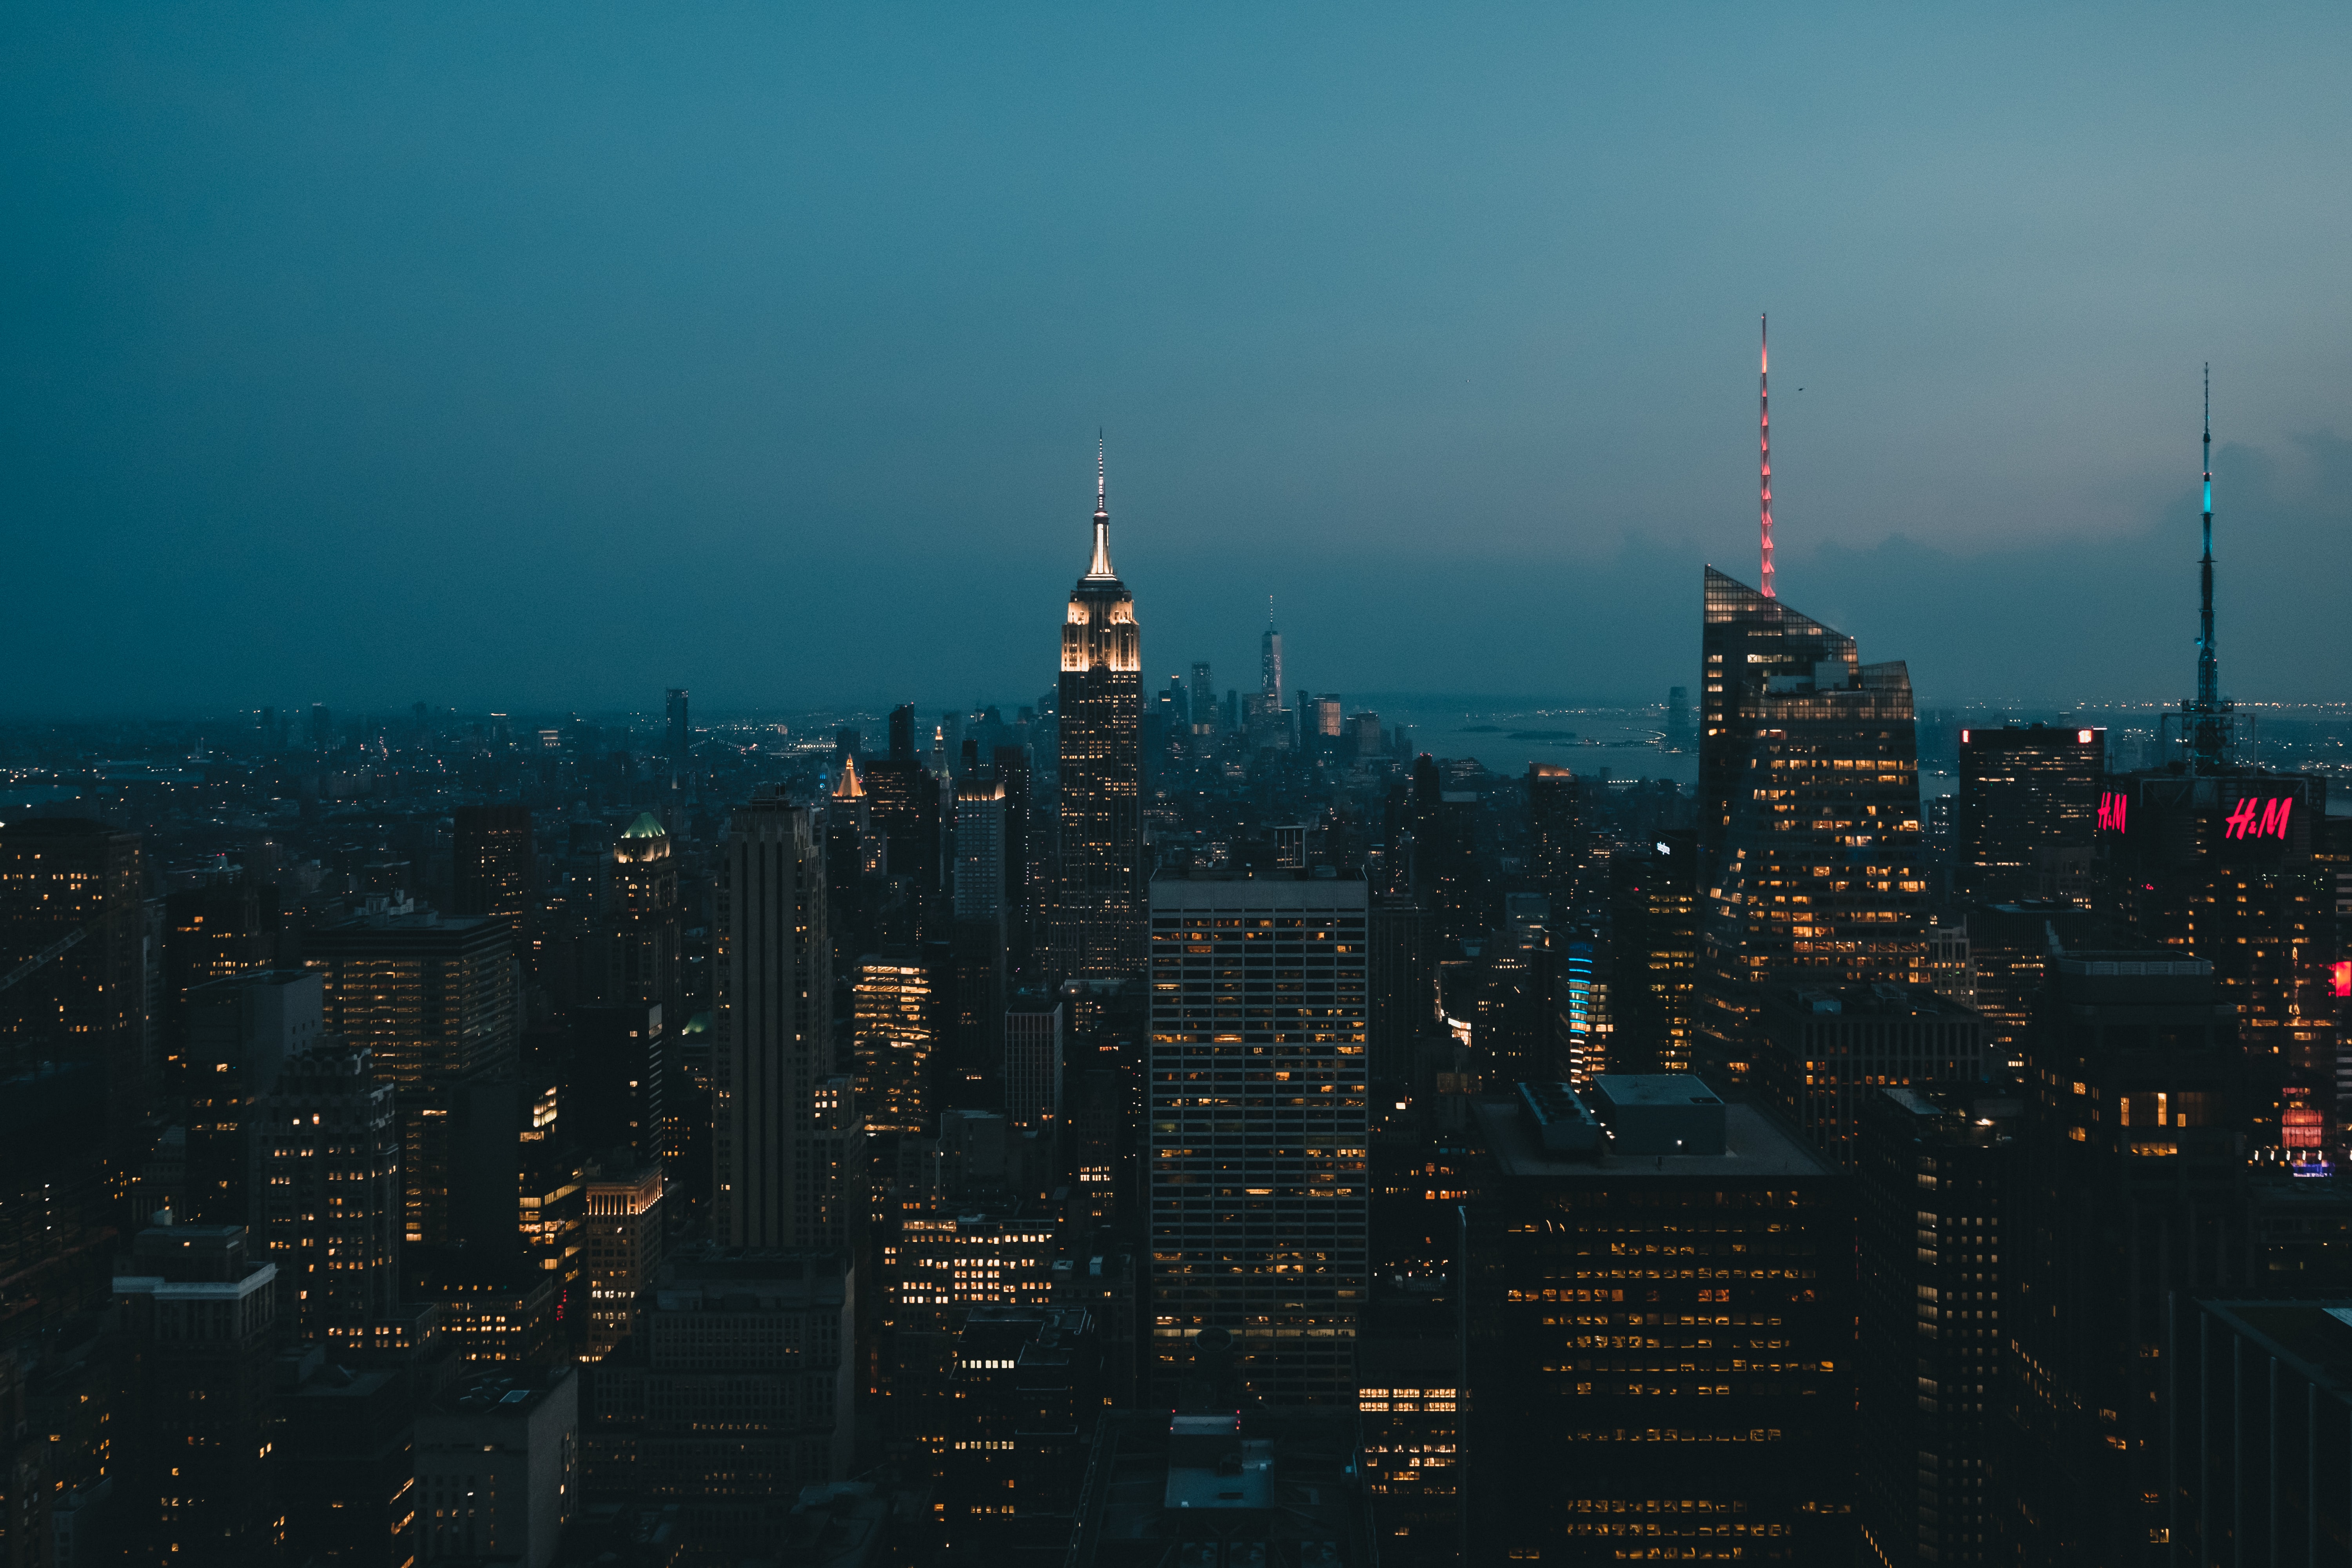 Night City Widescreen image